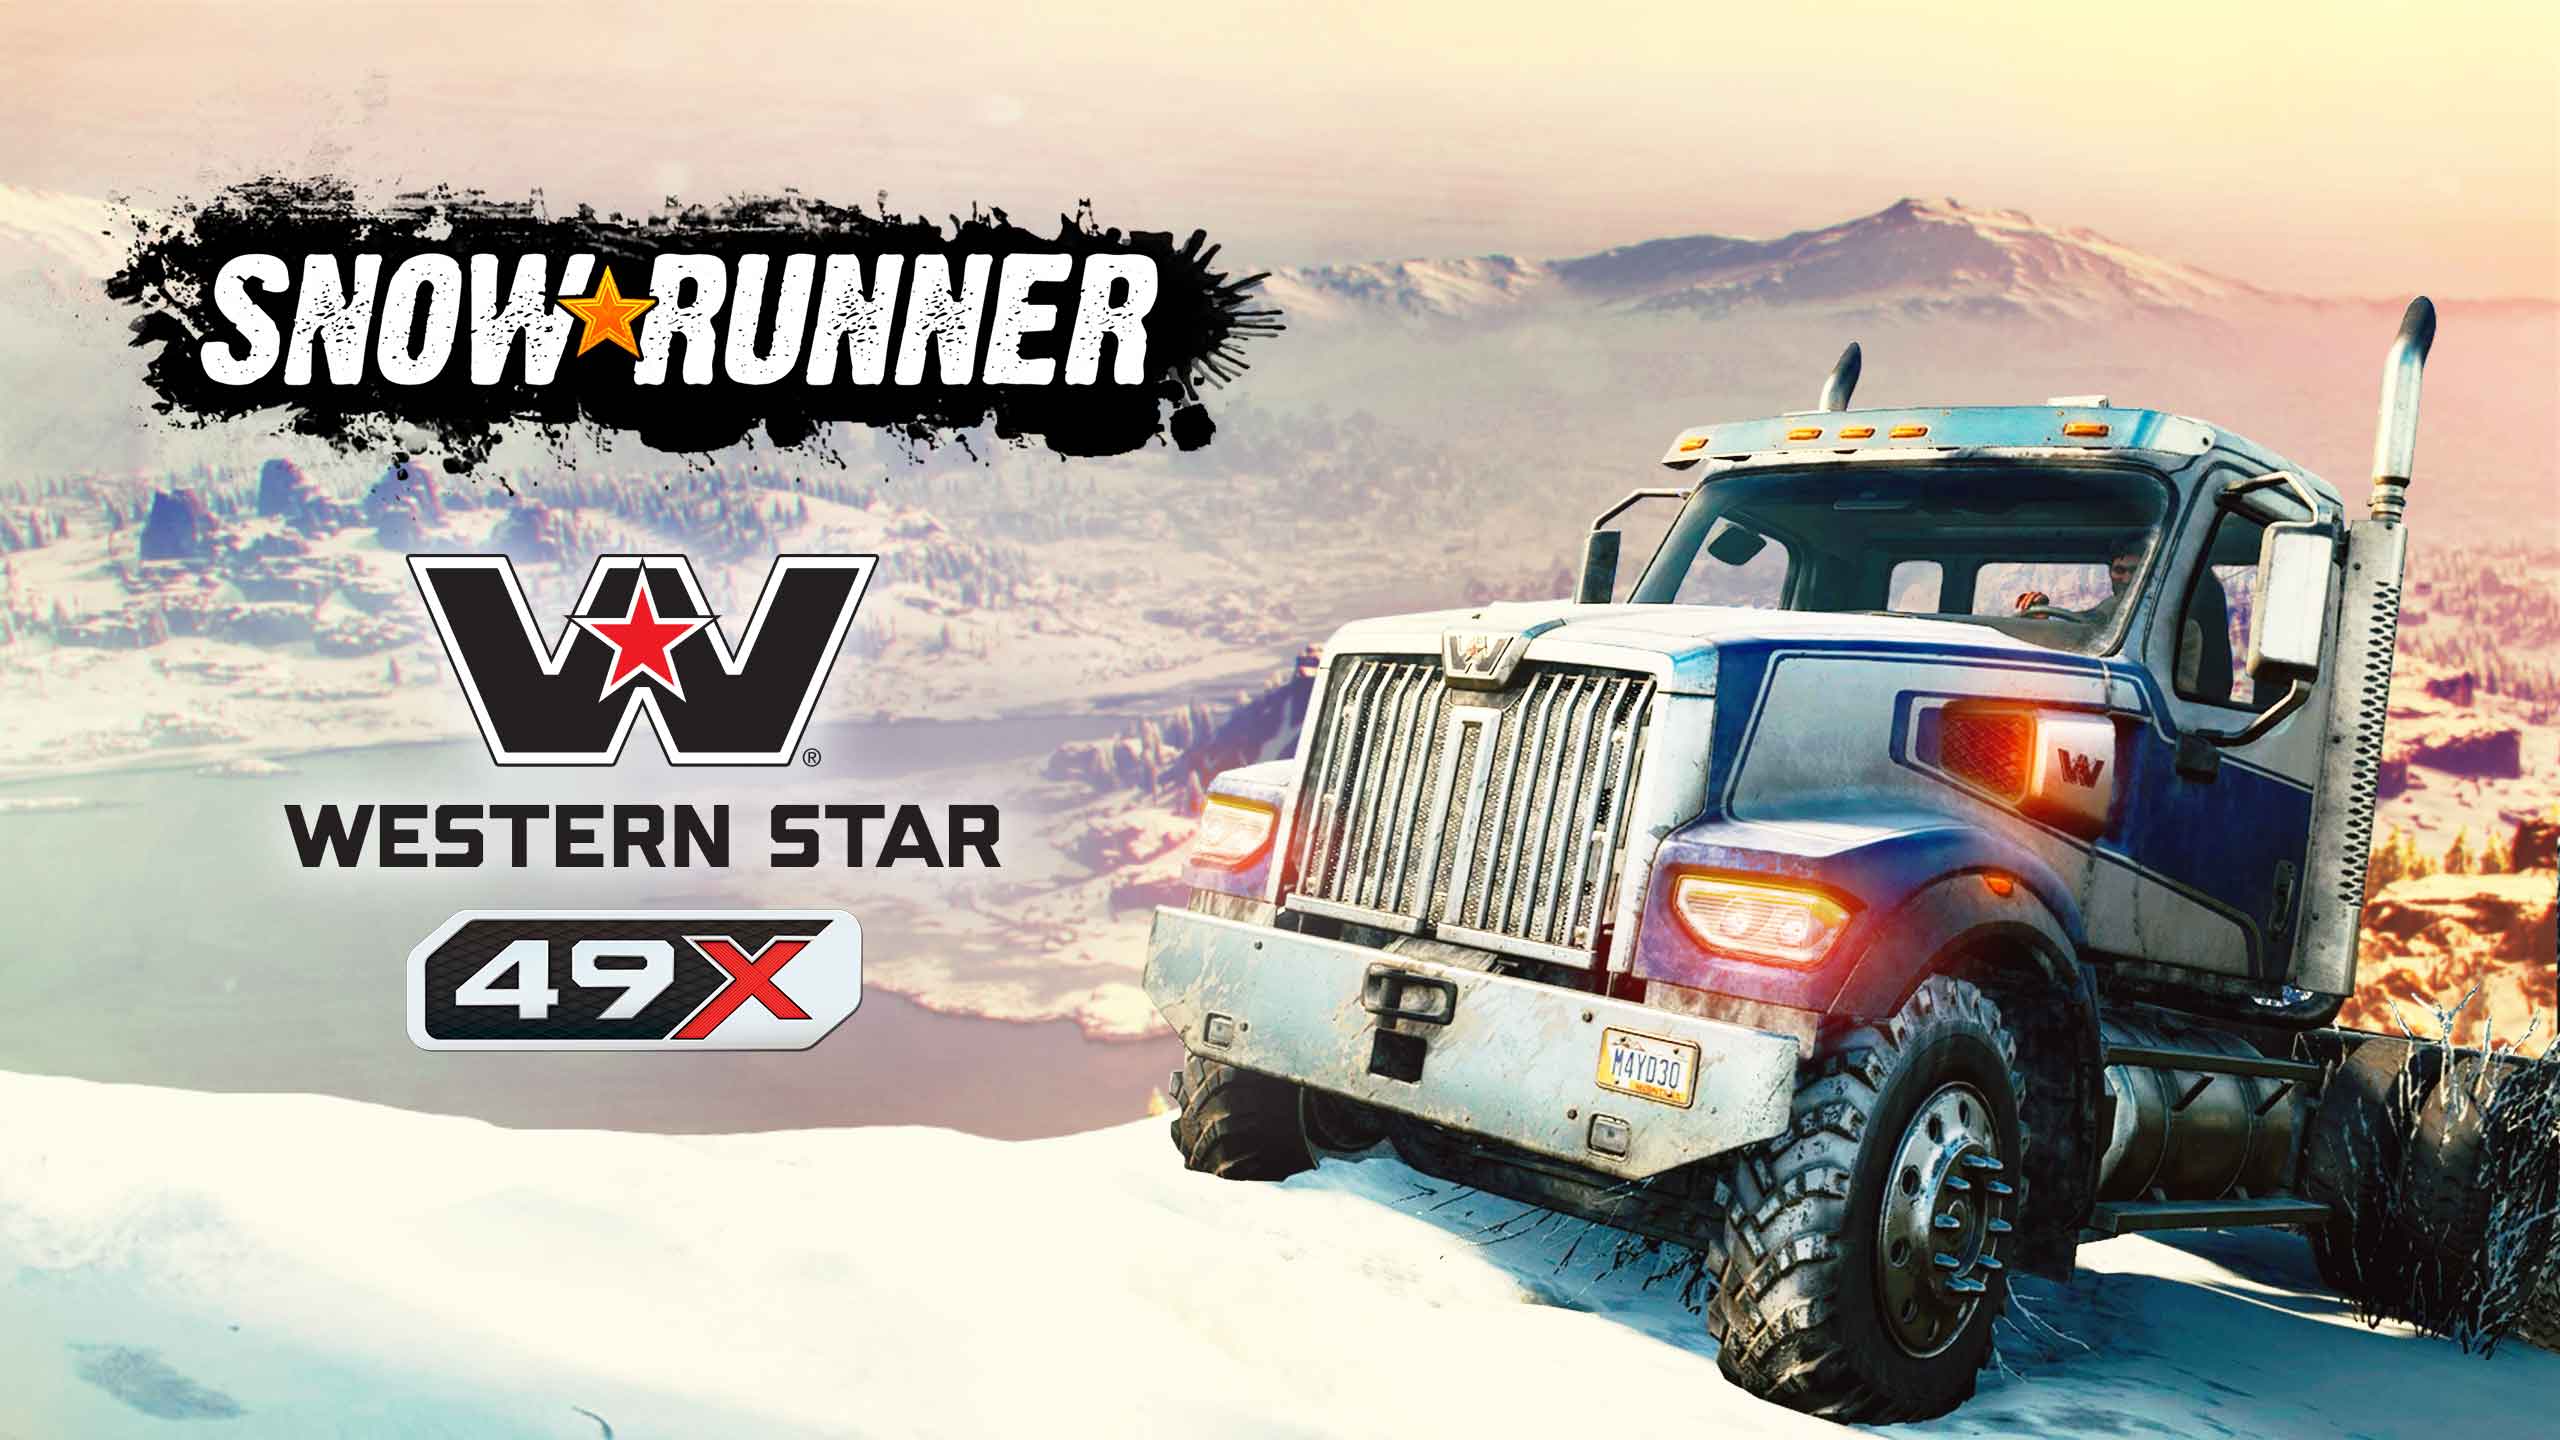 Snowrunner Western Star 49x Epic Games Store